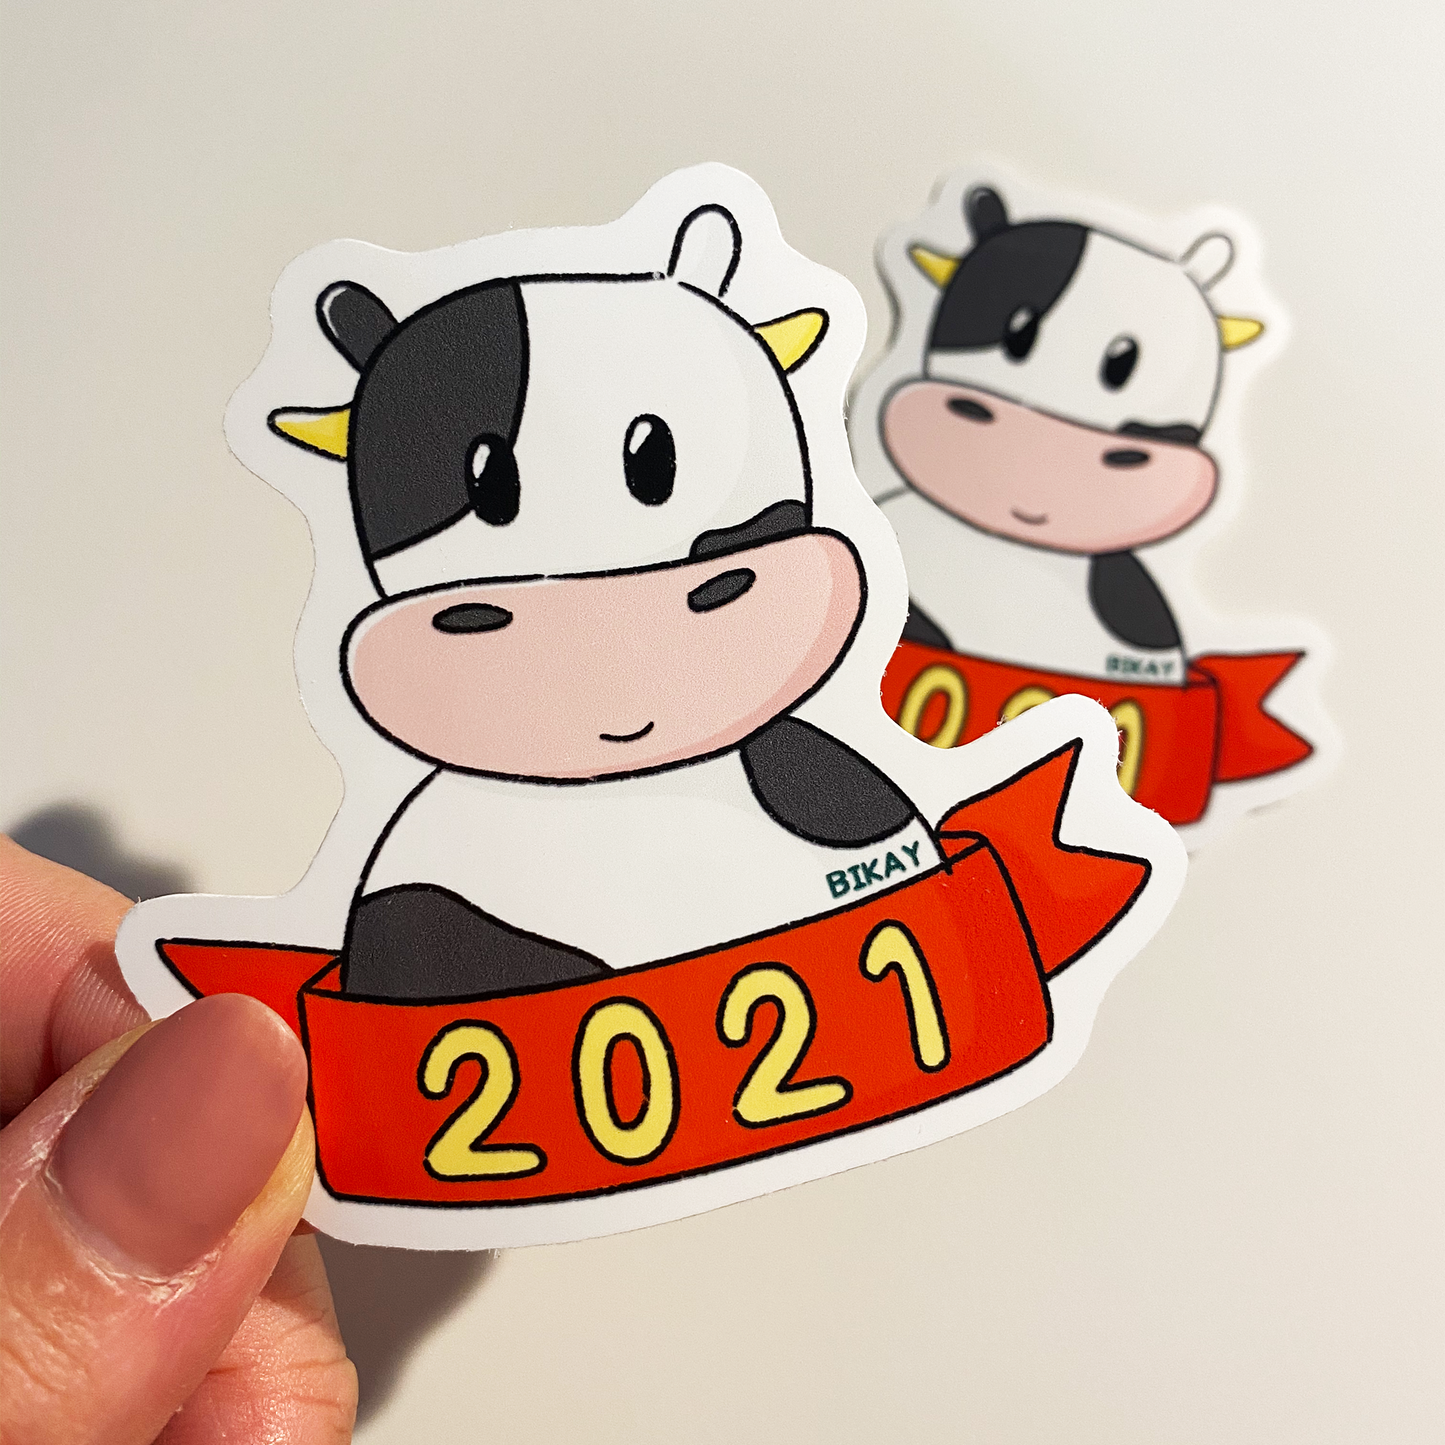 2021 Year of the Ox Vinyl Sticker